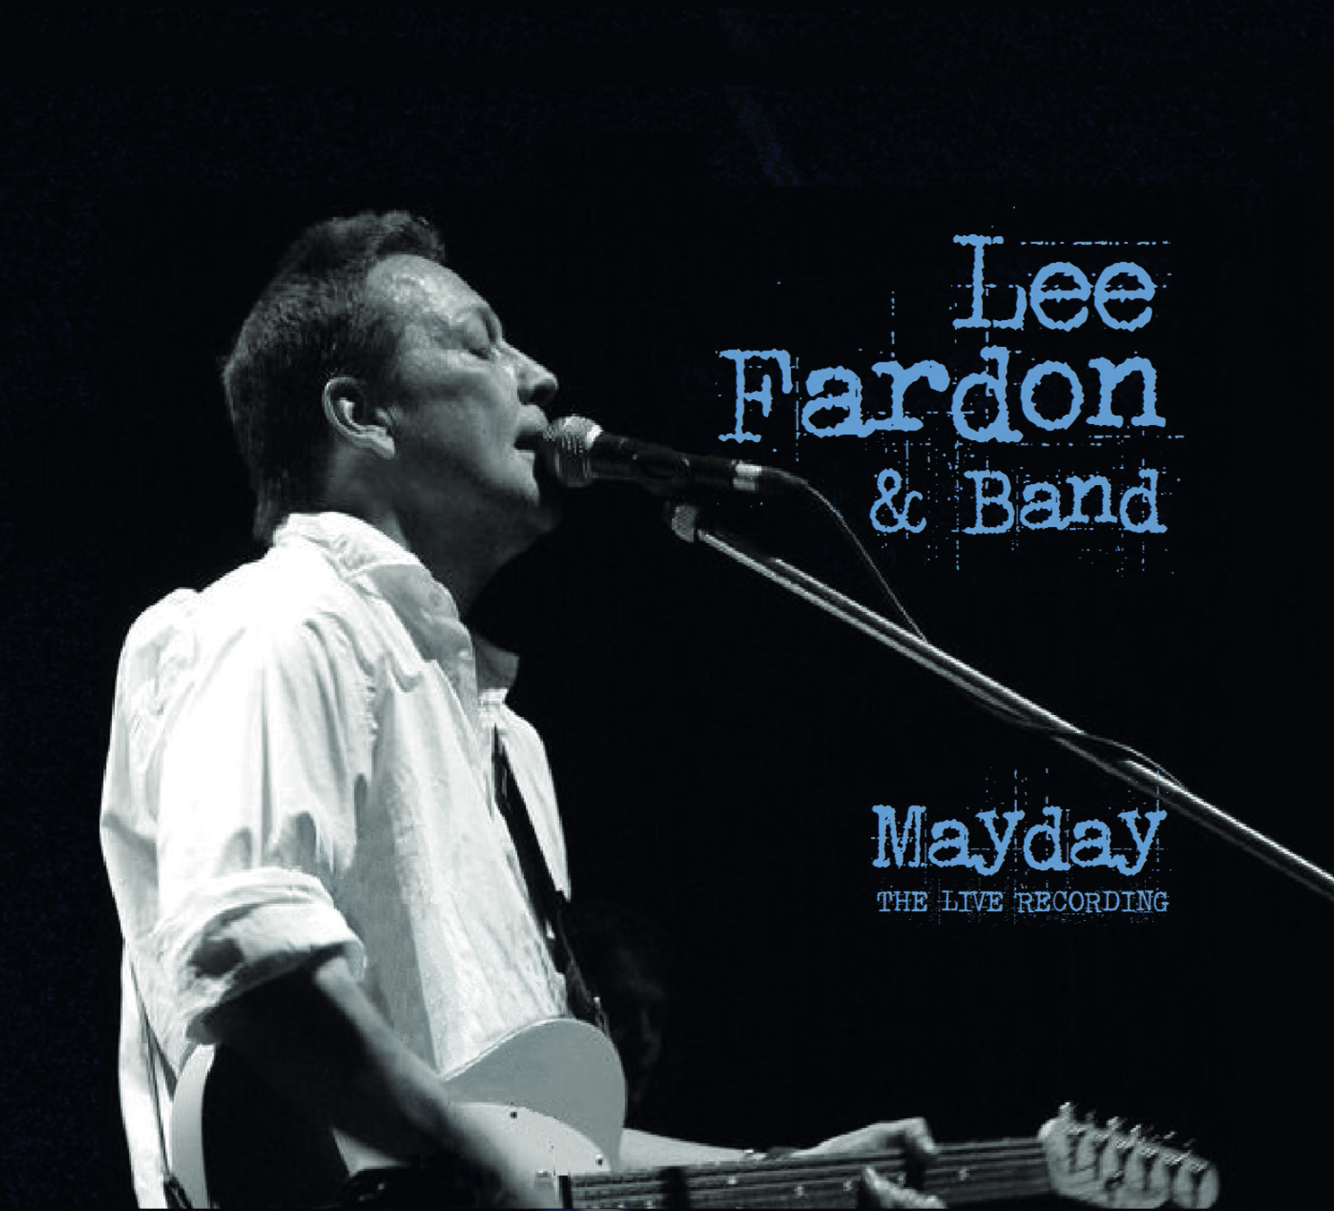 Lee Fardon & Band - Digital Album